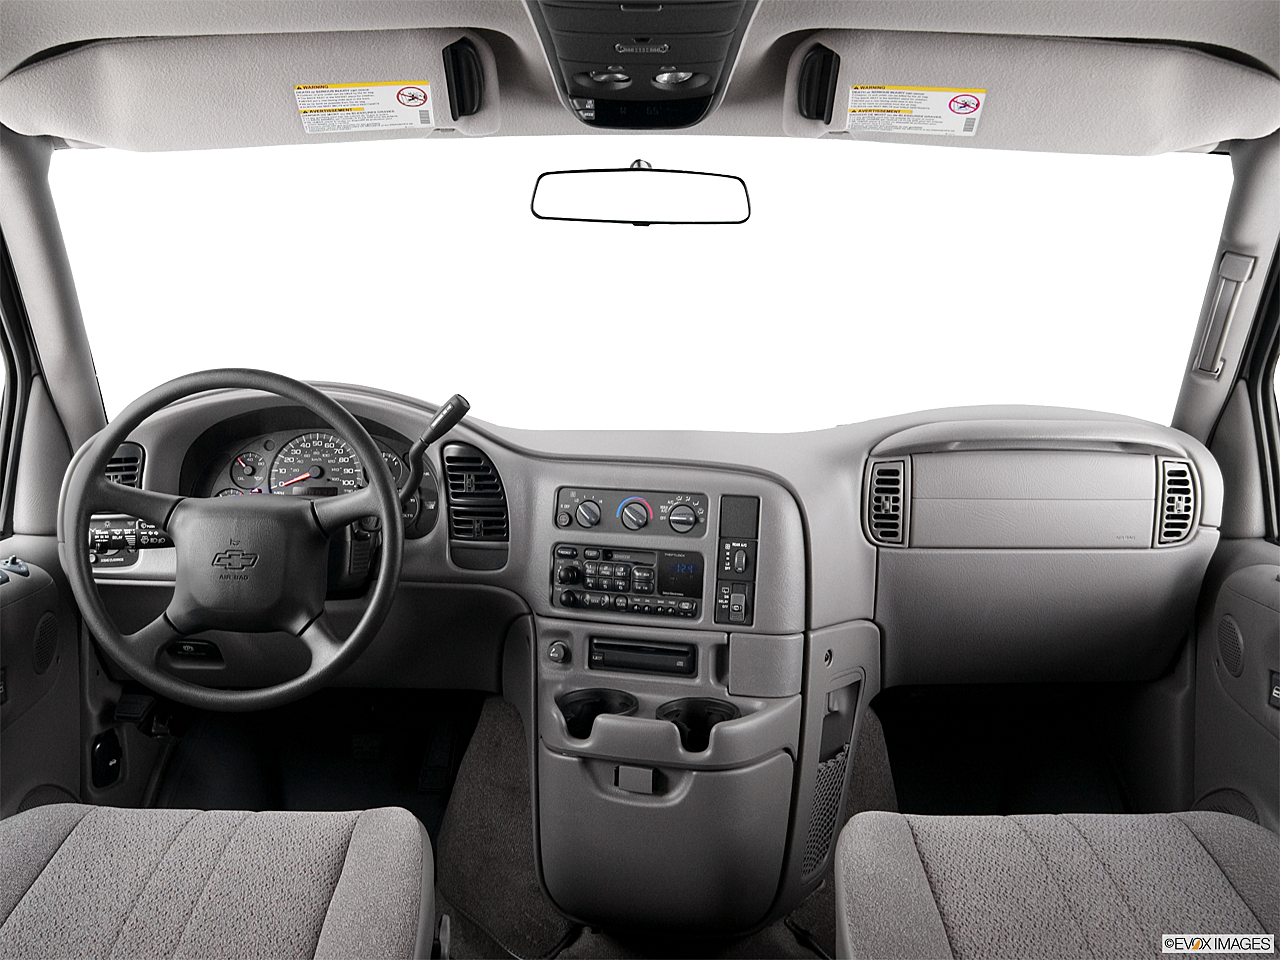 2005 Chevrolet Astro LT 3dr Extended Mini-Van - Research - GrooveCar